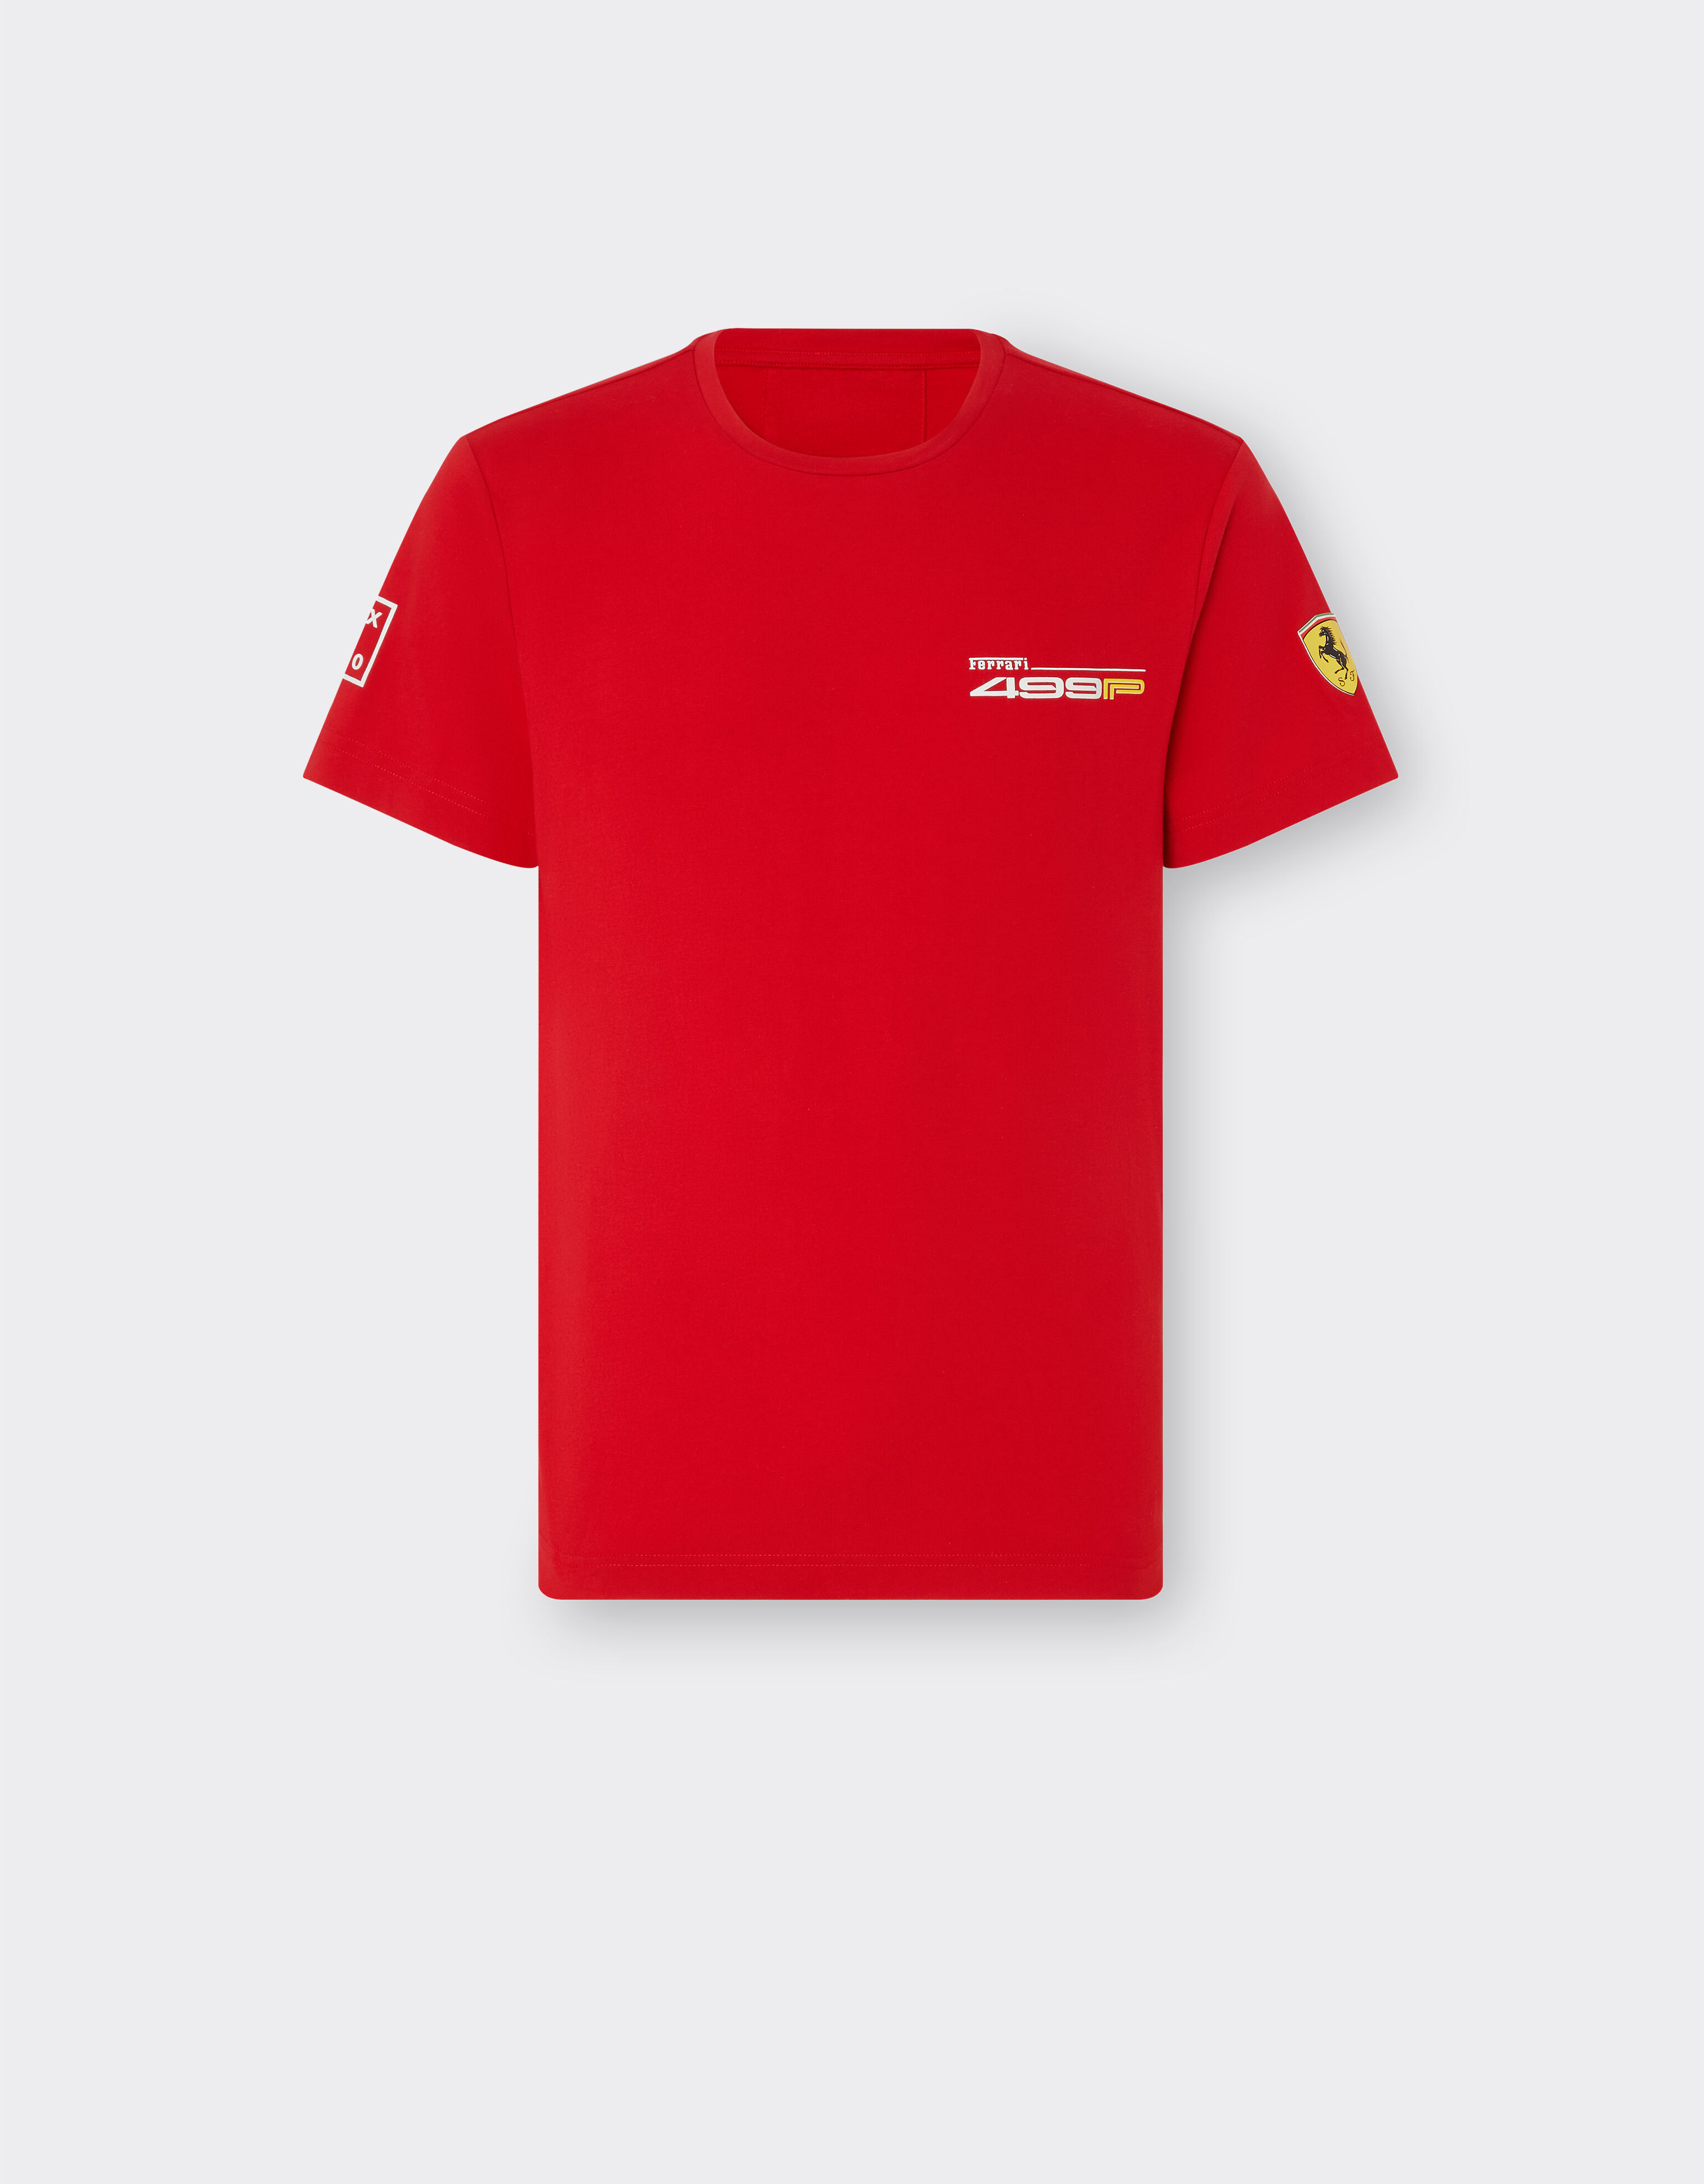 ${brand} Ferrari Hypercar 499P Tシャツ ${colorDescription} ${masterID}